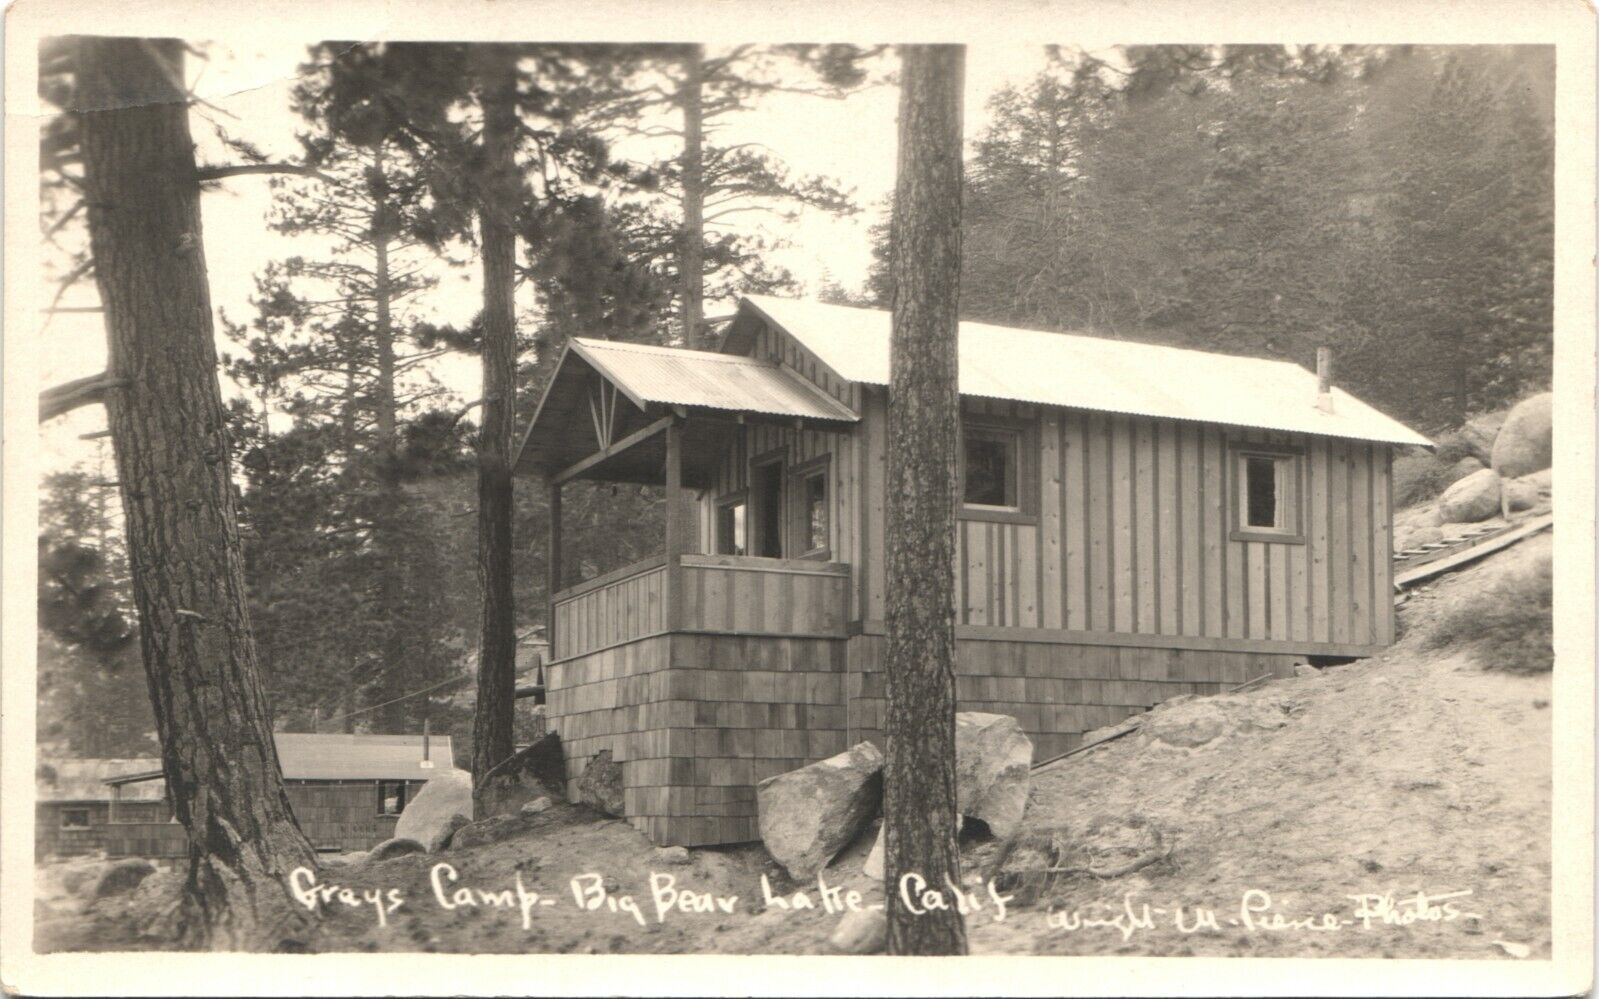 BIG BEAR LAKE GRAYS CAMP real photo postcard 1940s CALIFORNIA CA RPPC